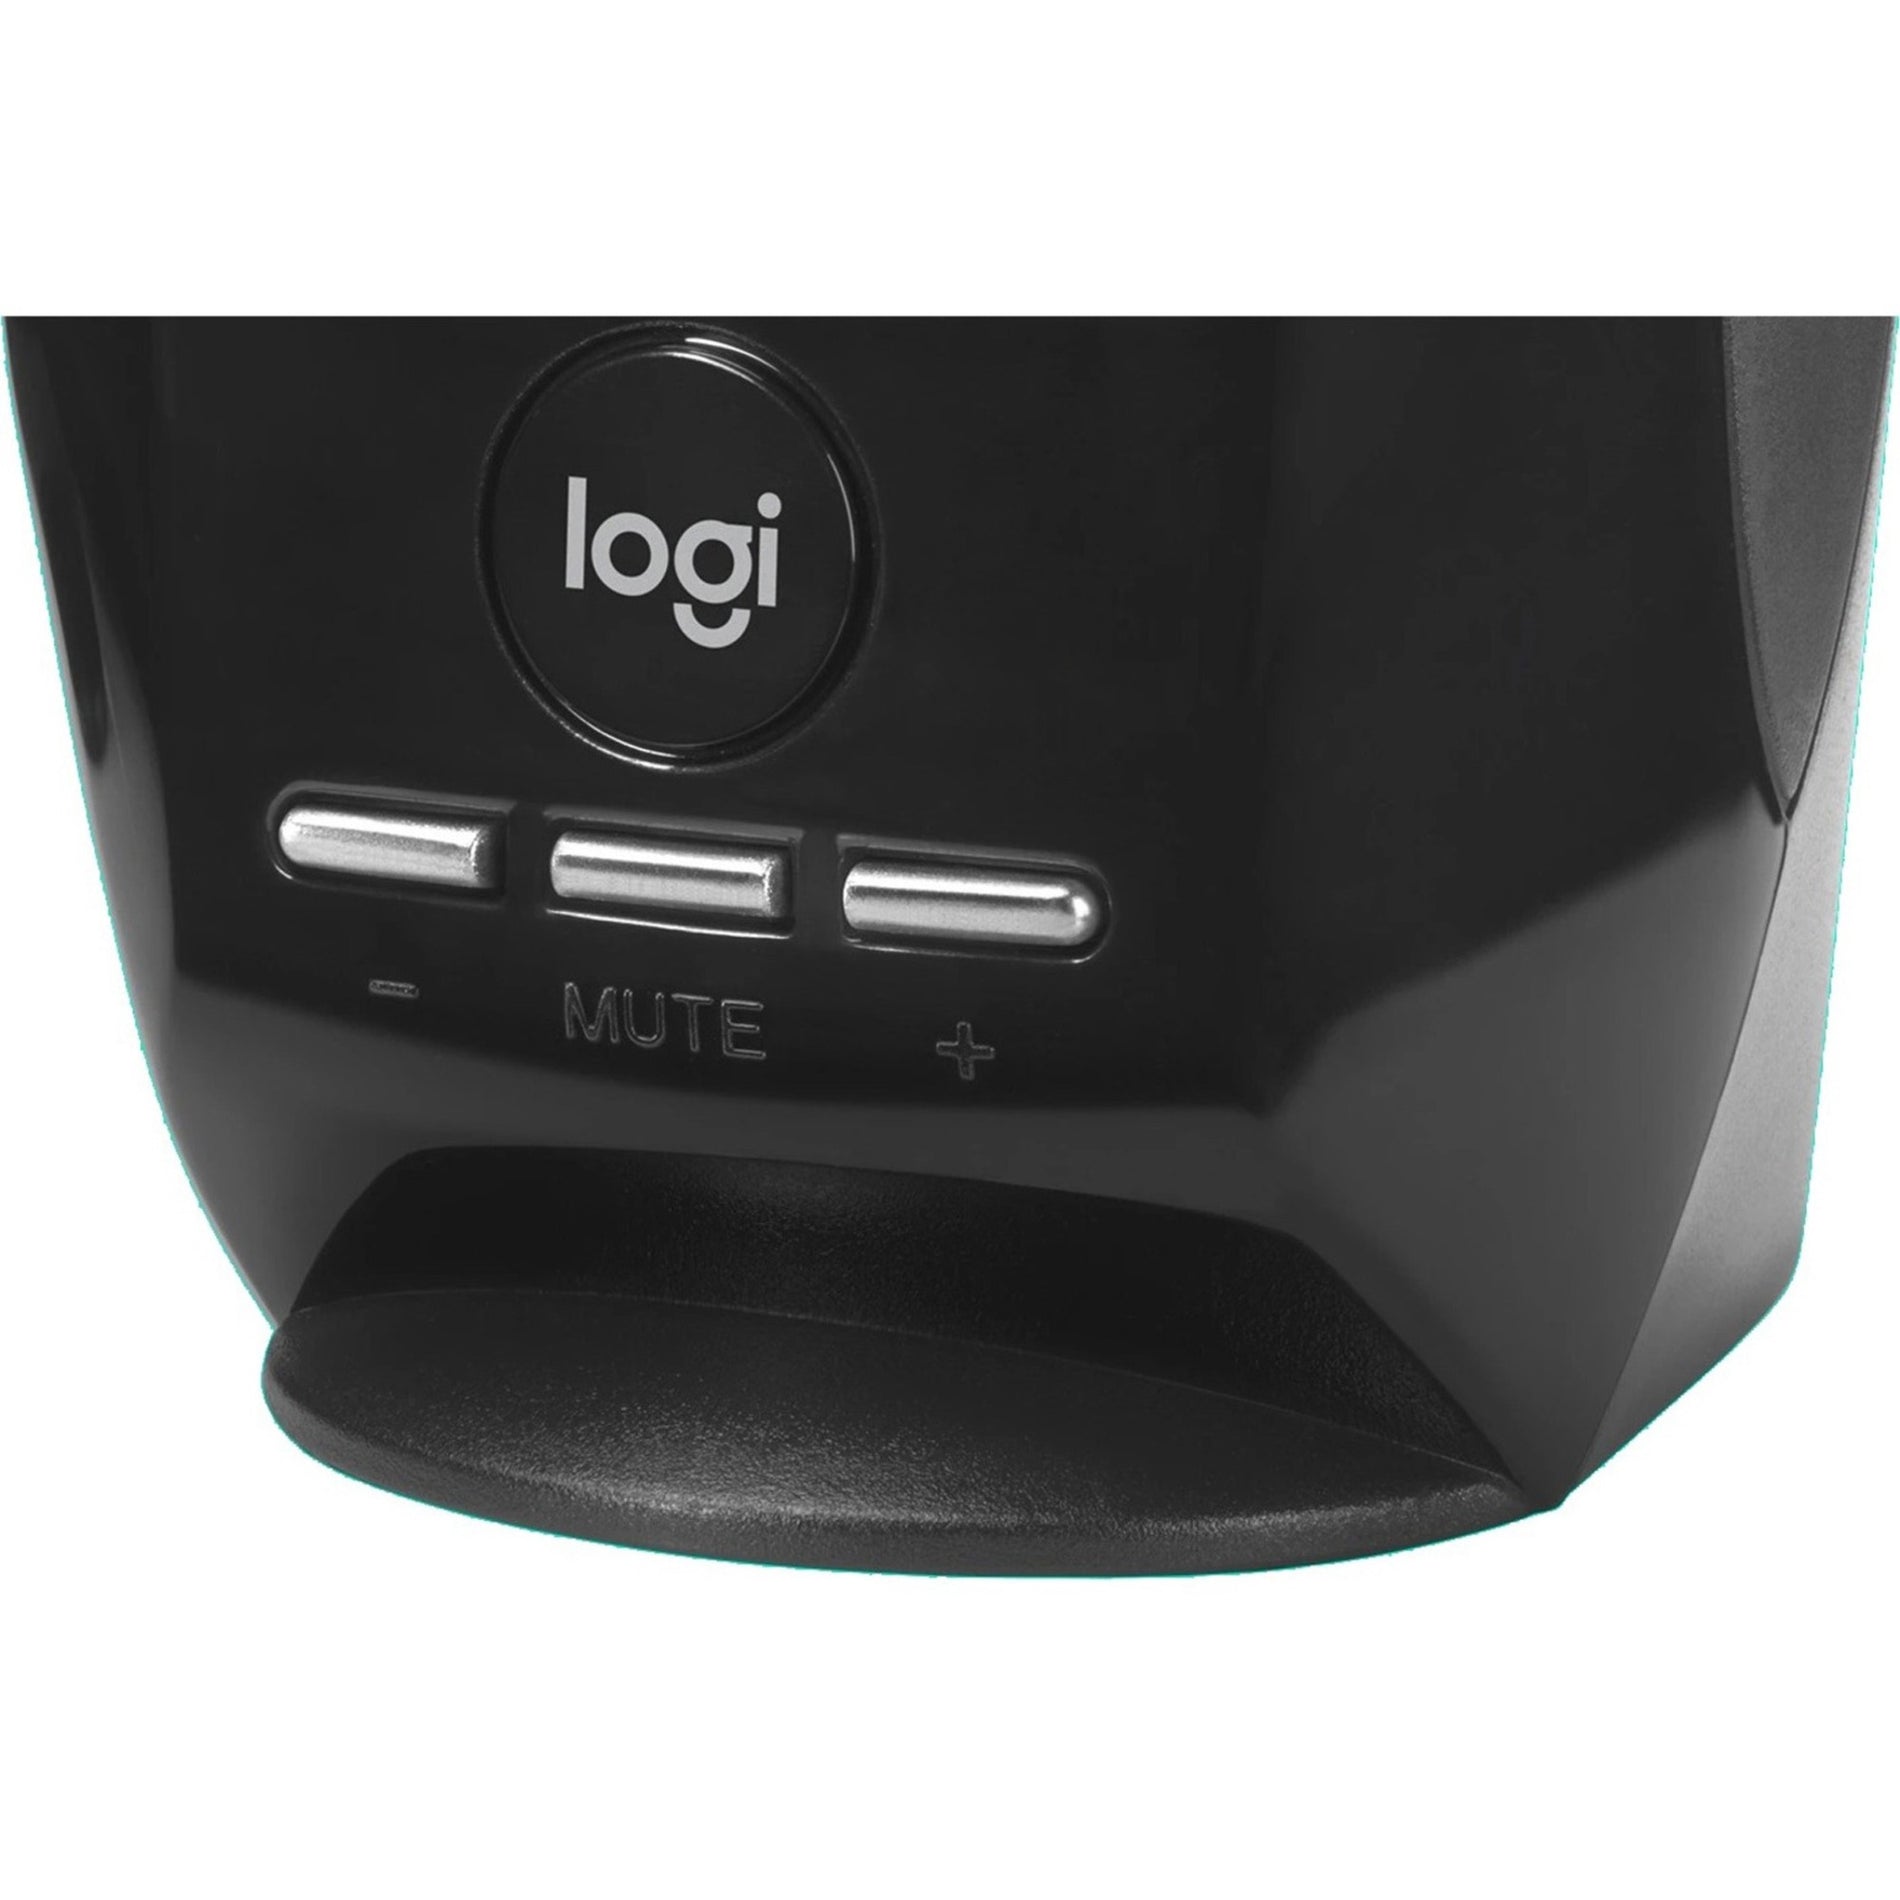 Logitech 980-000028 S150 Digital USB Speaker System, 1.20 W RMS, Black